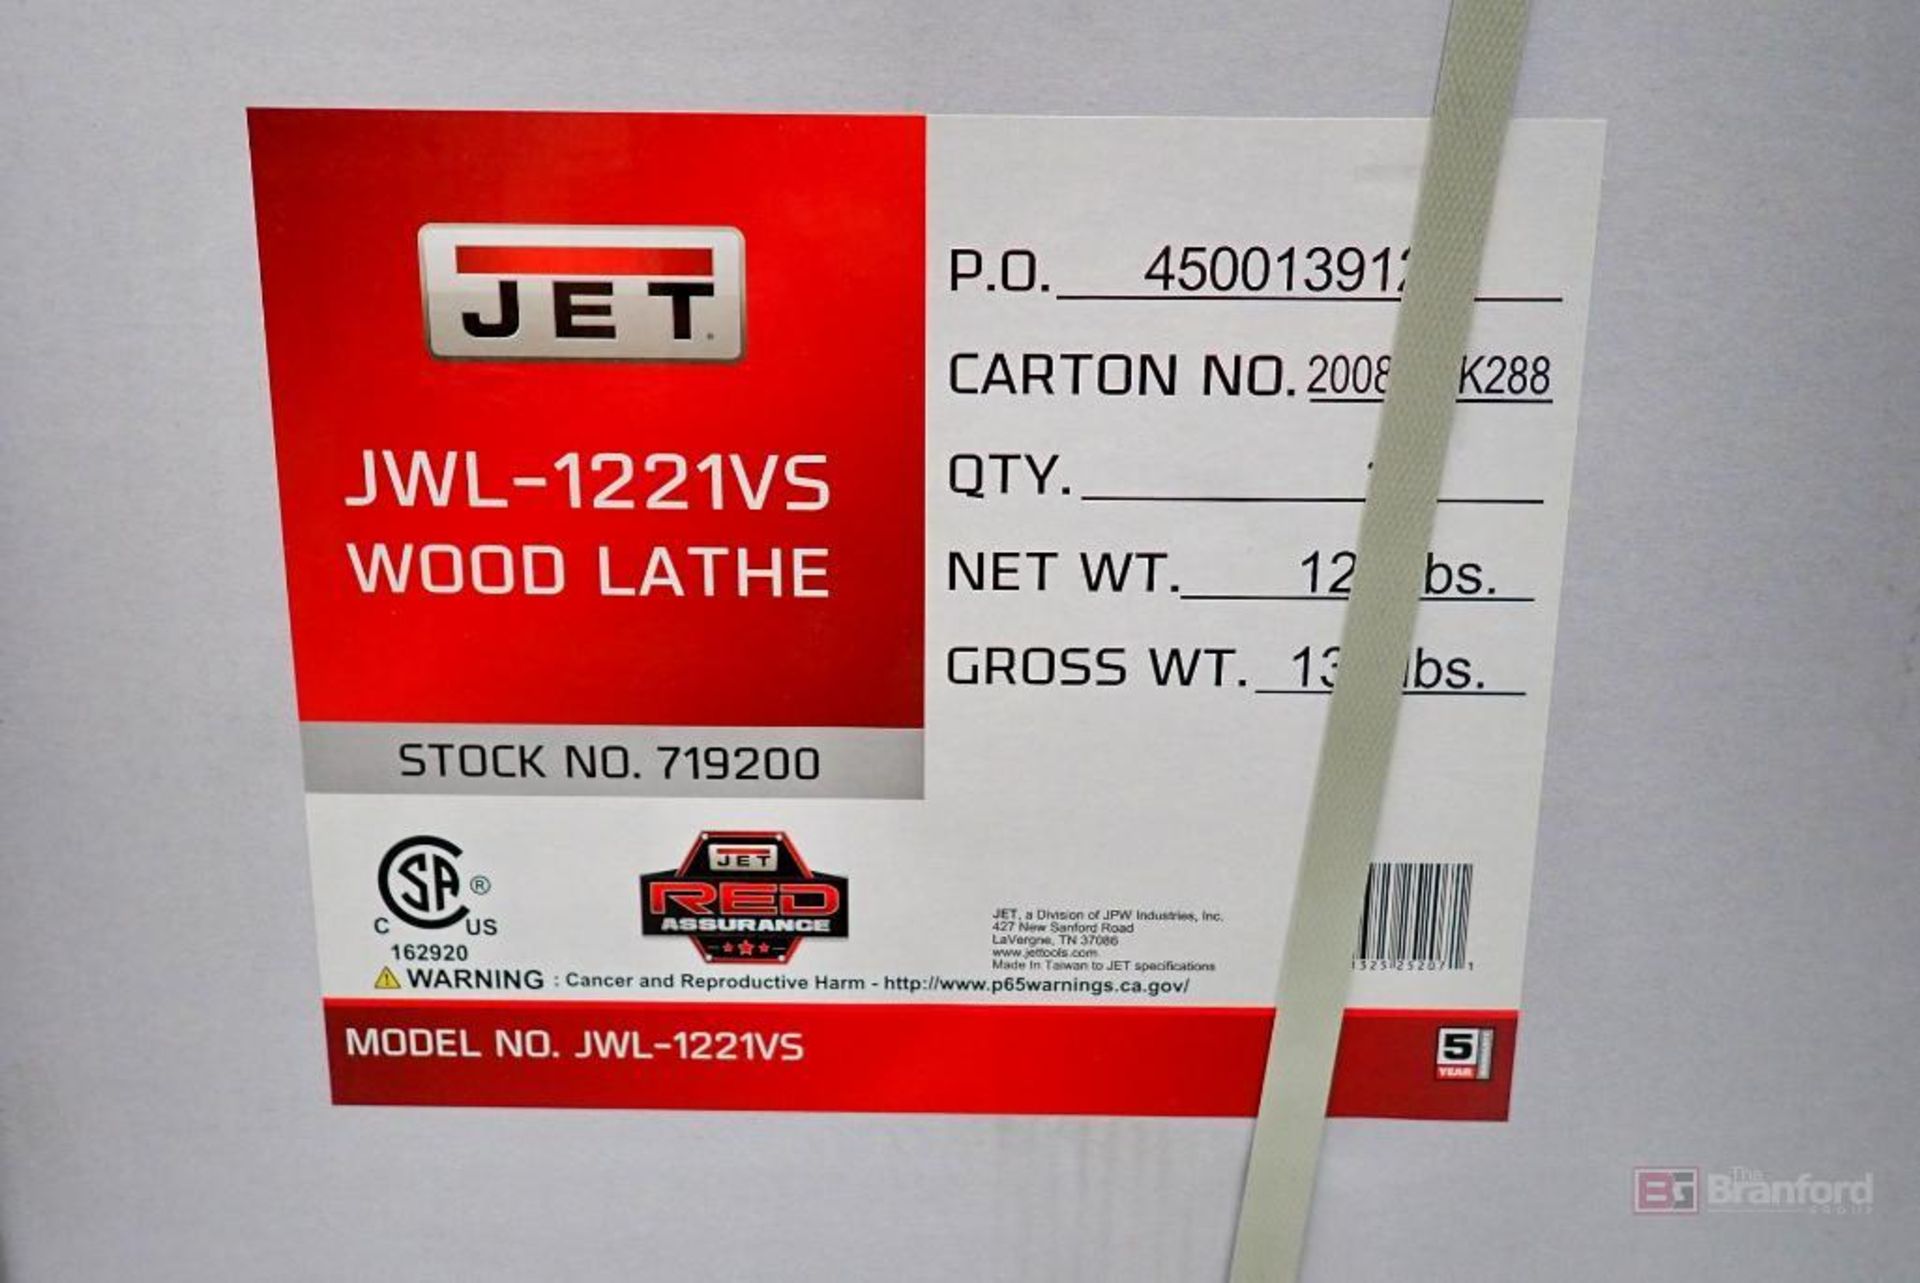 Jet JWL-1221VS Wood Lathe - Image 2 of 4